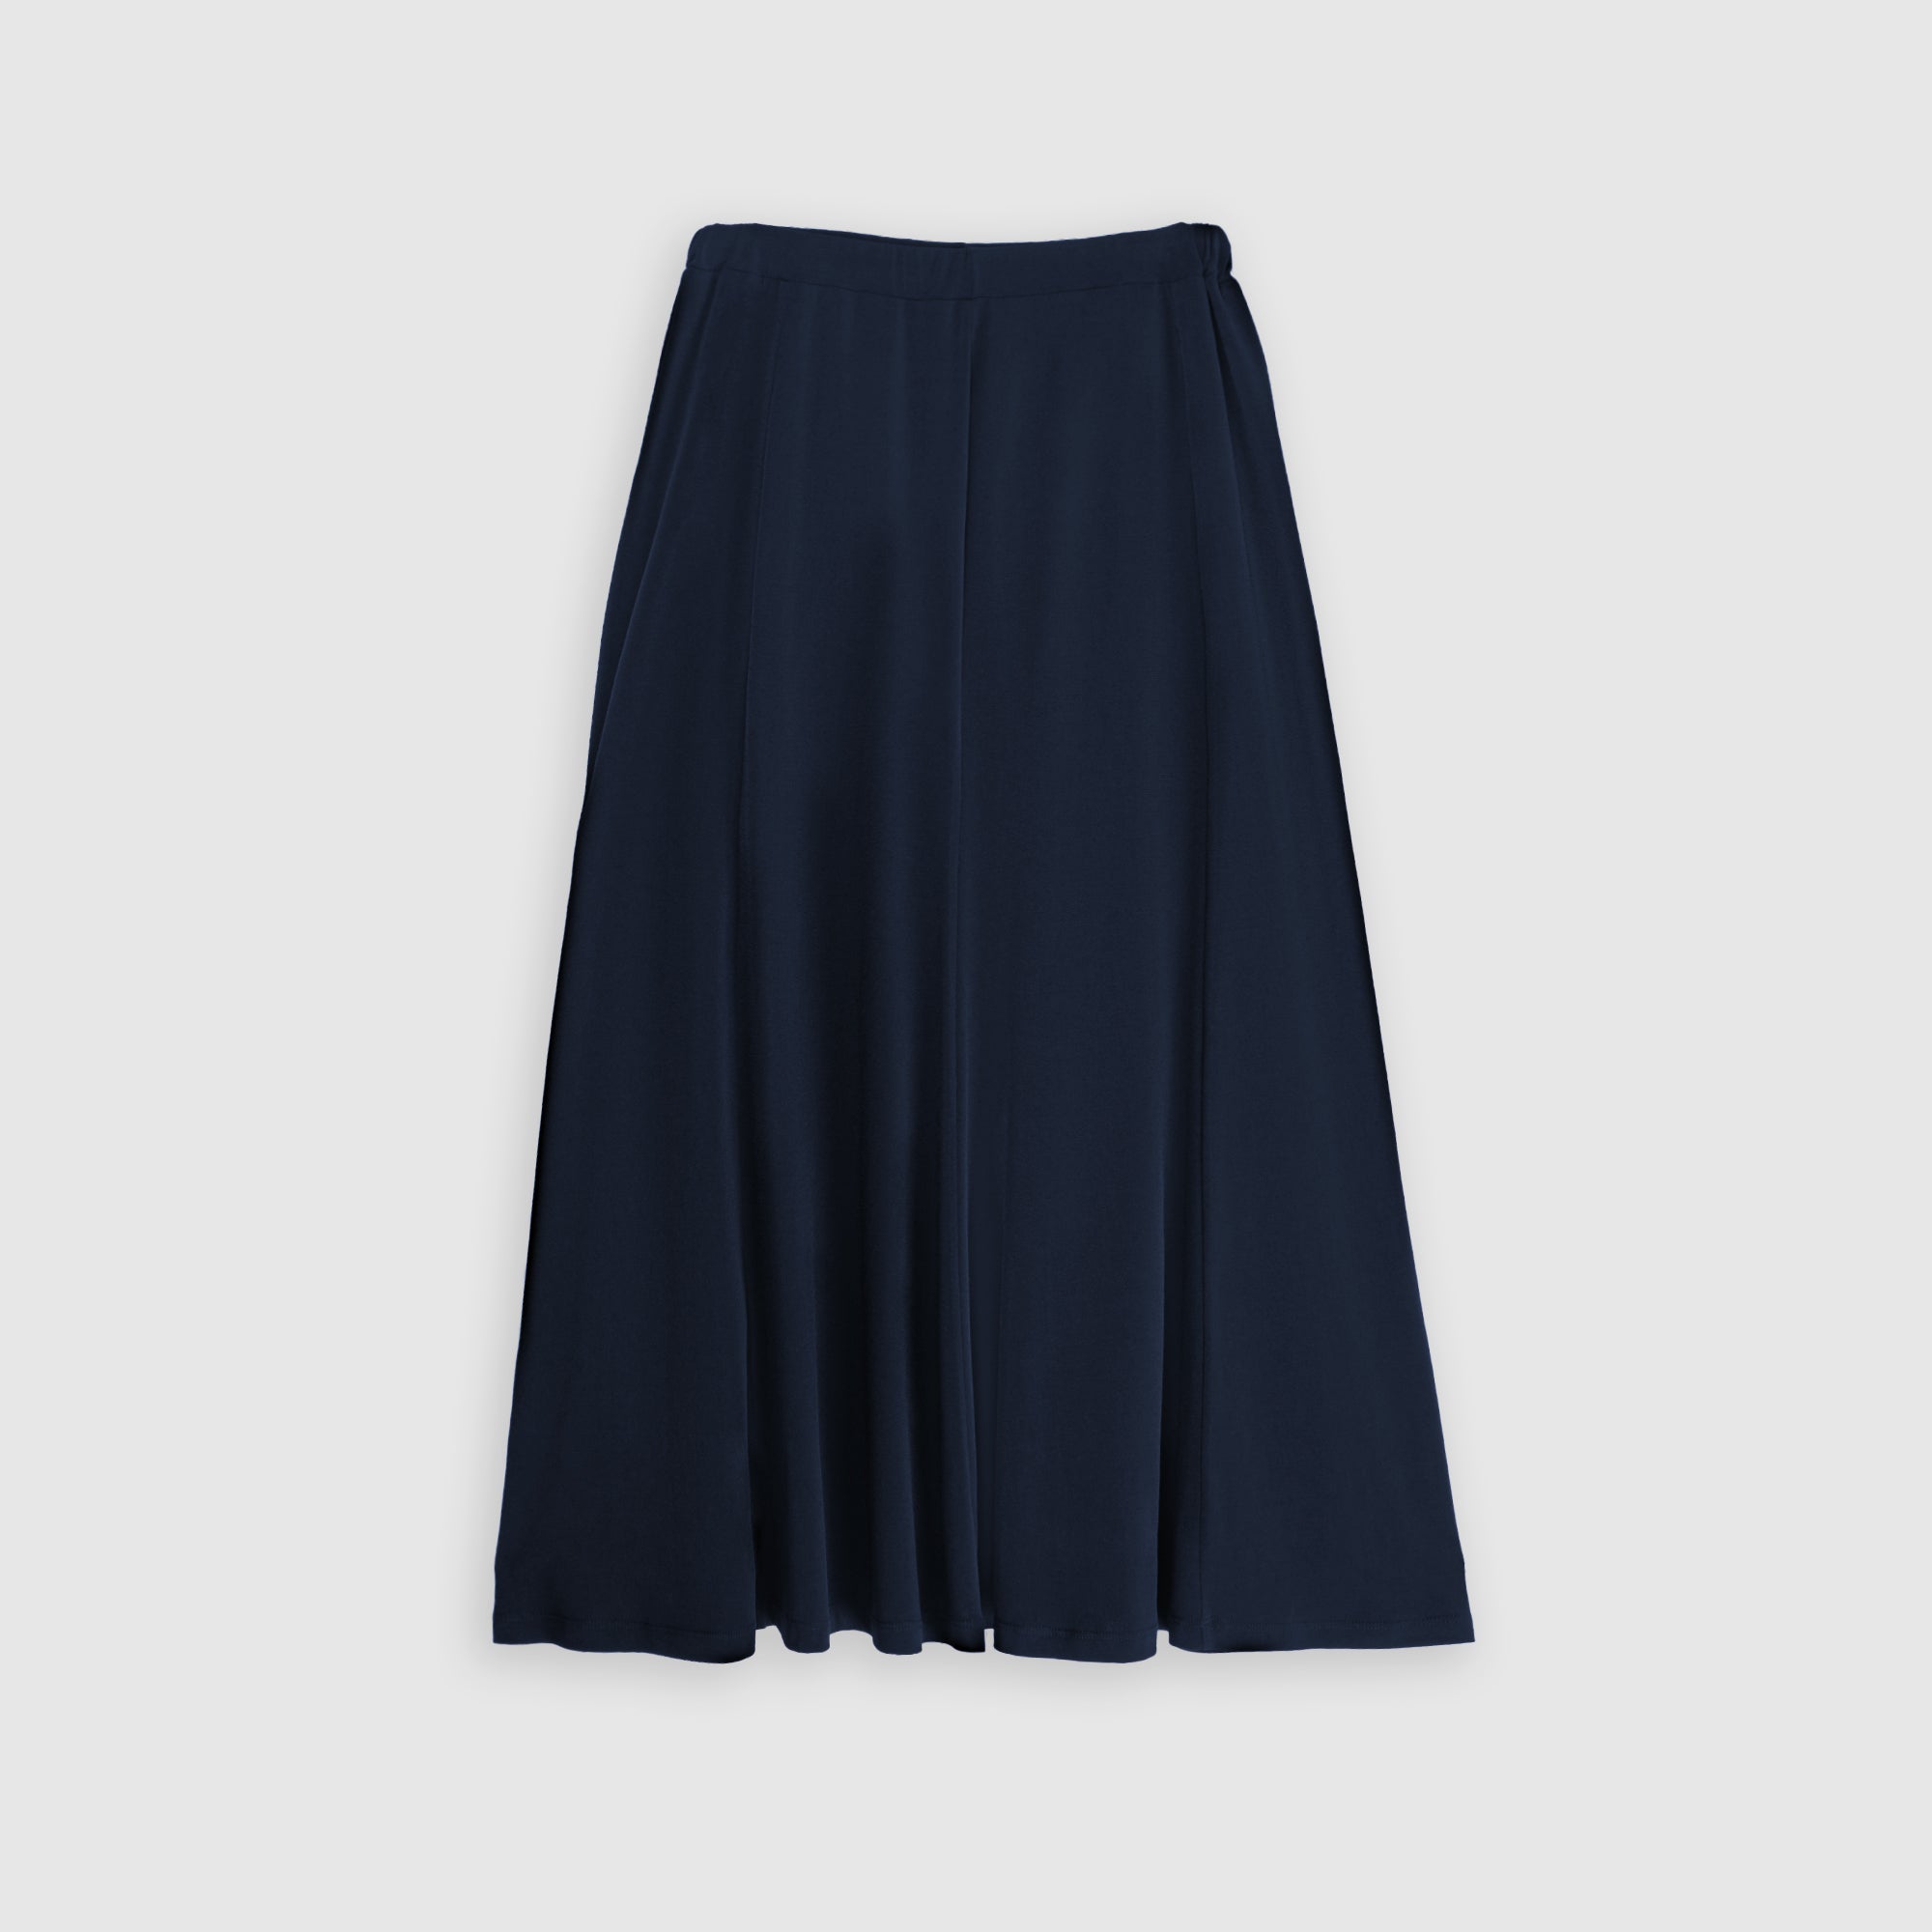 Essential Six Panel Skirt